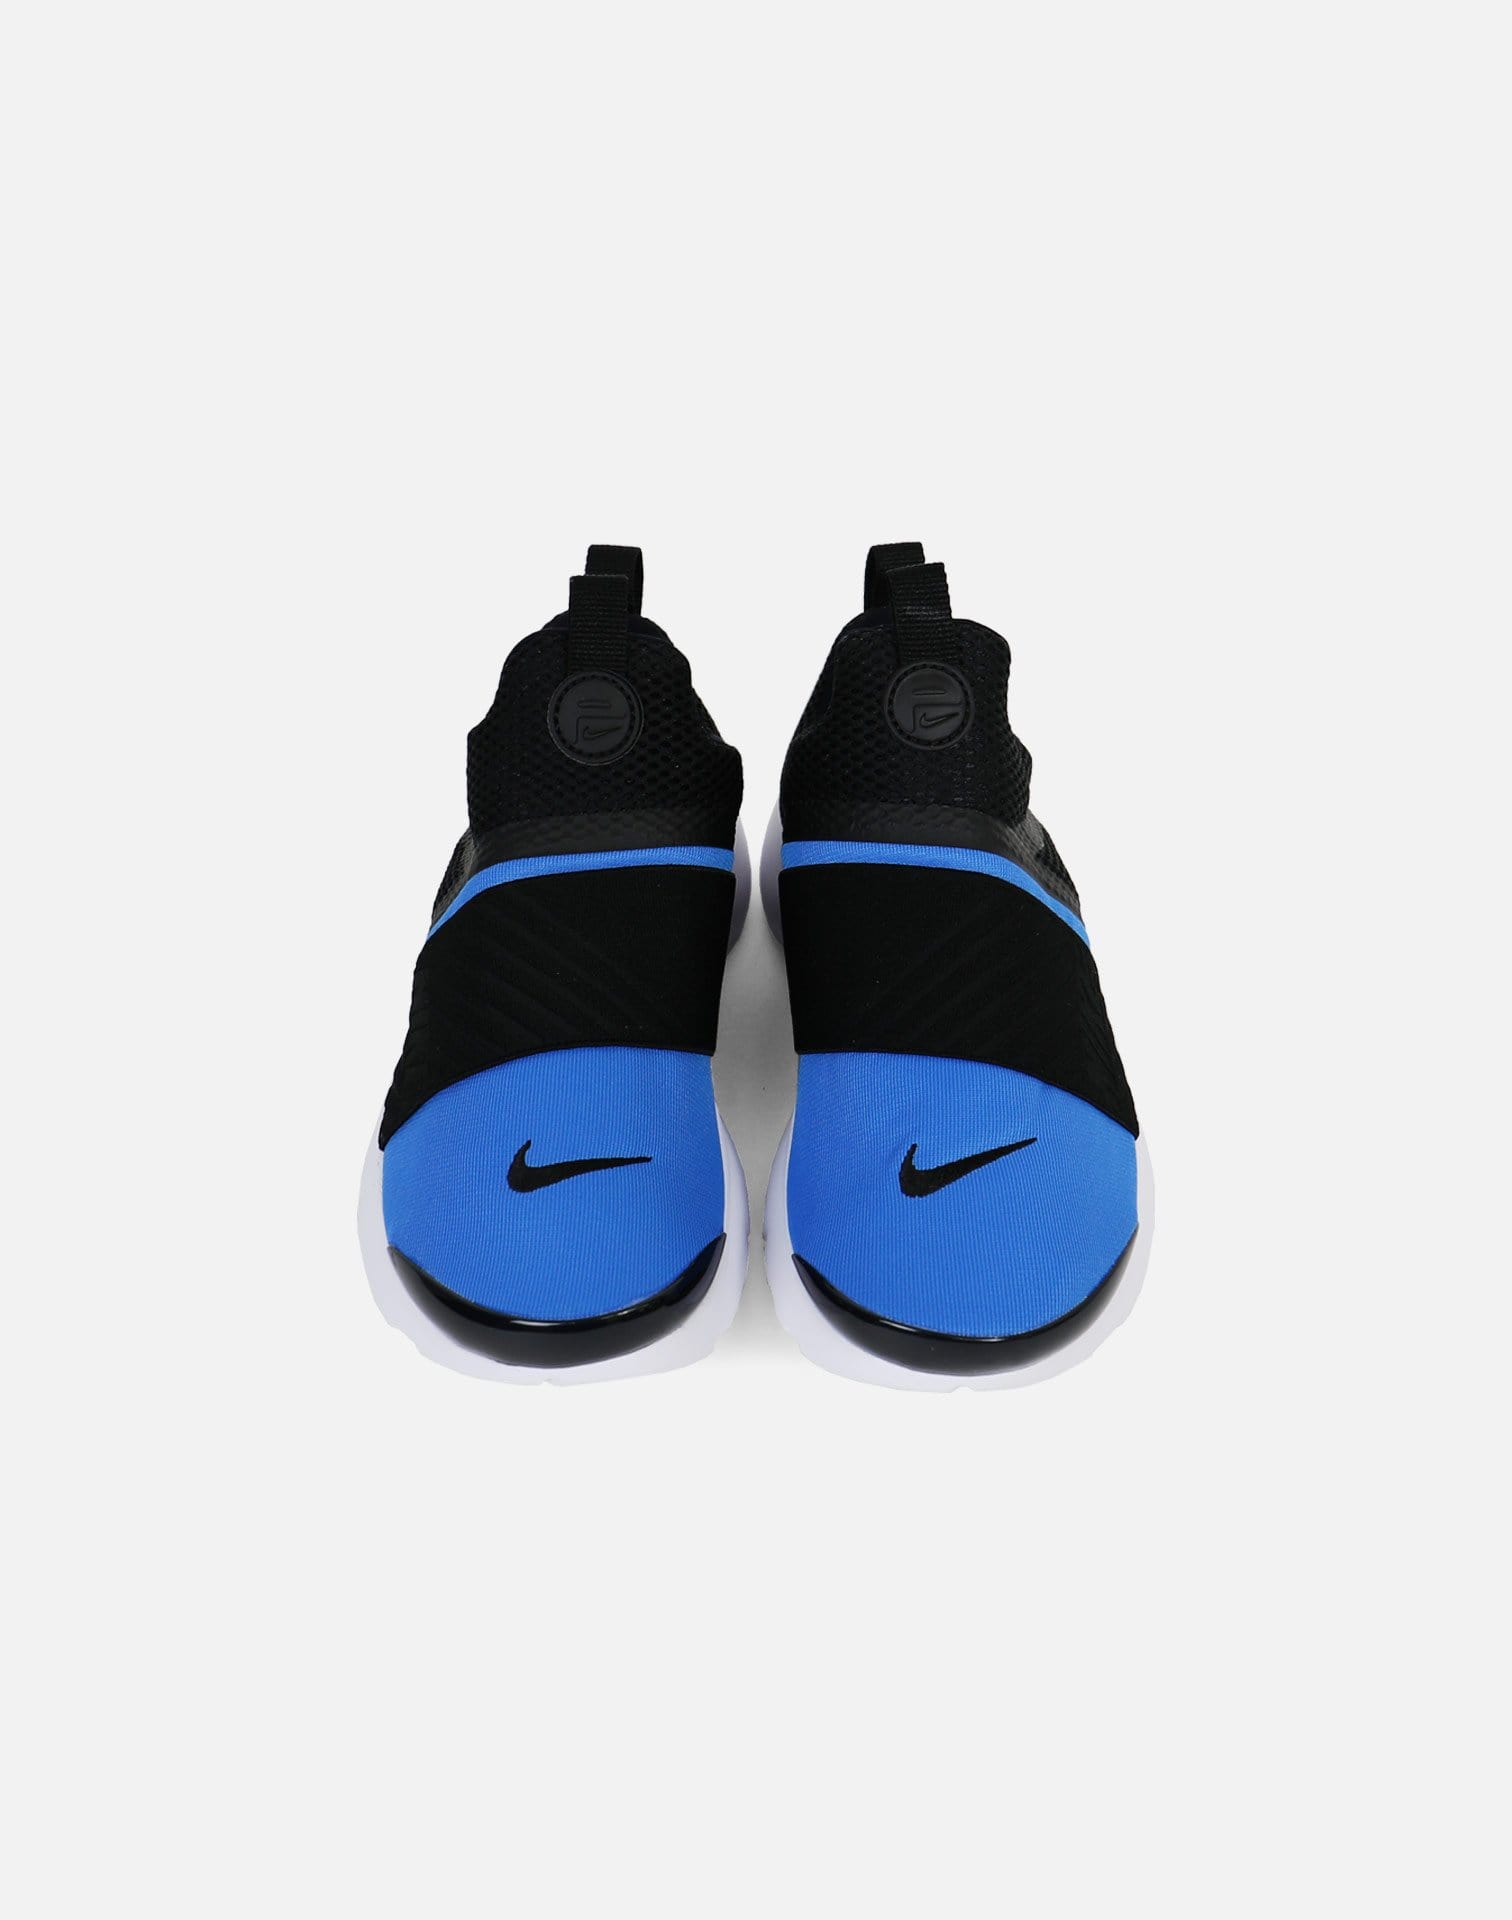 Nike Presto Extreme Pre-School (Dark Blue/White)